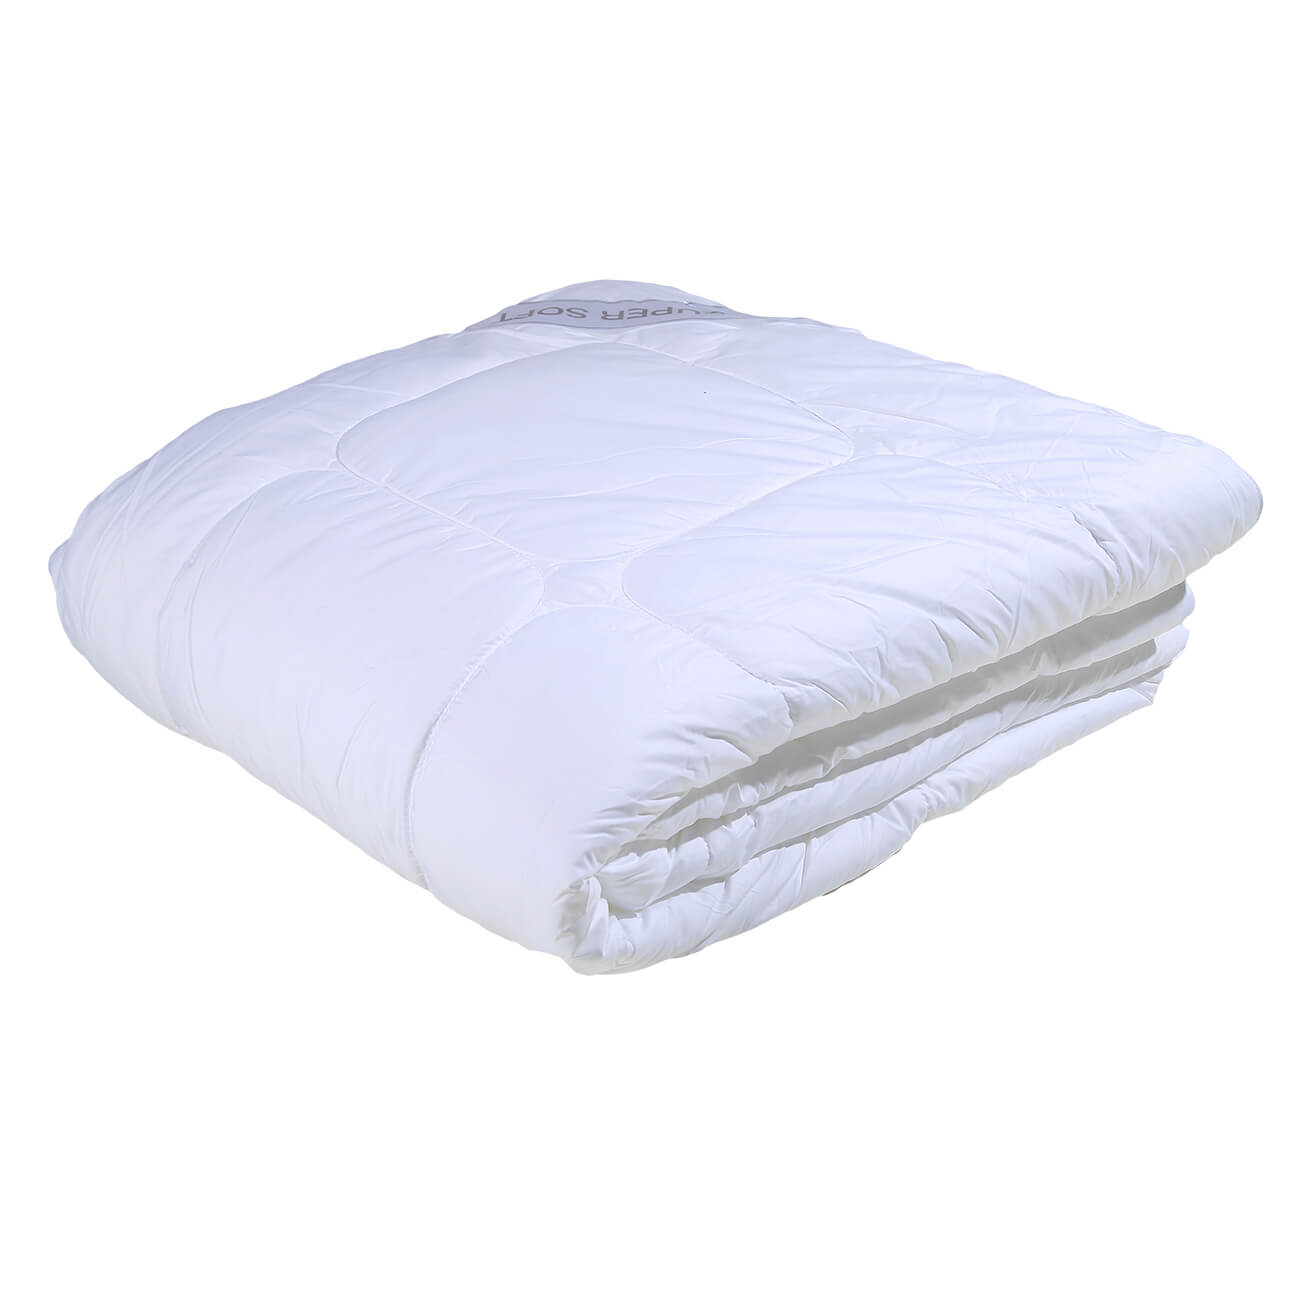 Одеяло, 200х220 см, микрофибра, Super Soft одеяло огнеупорное теплоизоляционное профикамин 7300x610x13 мм